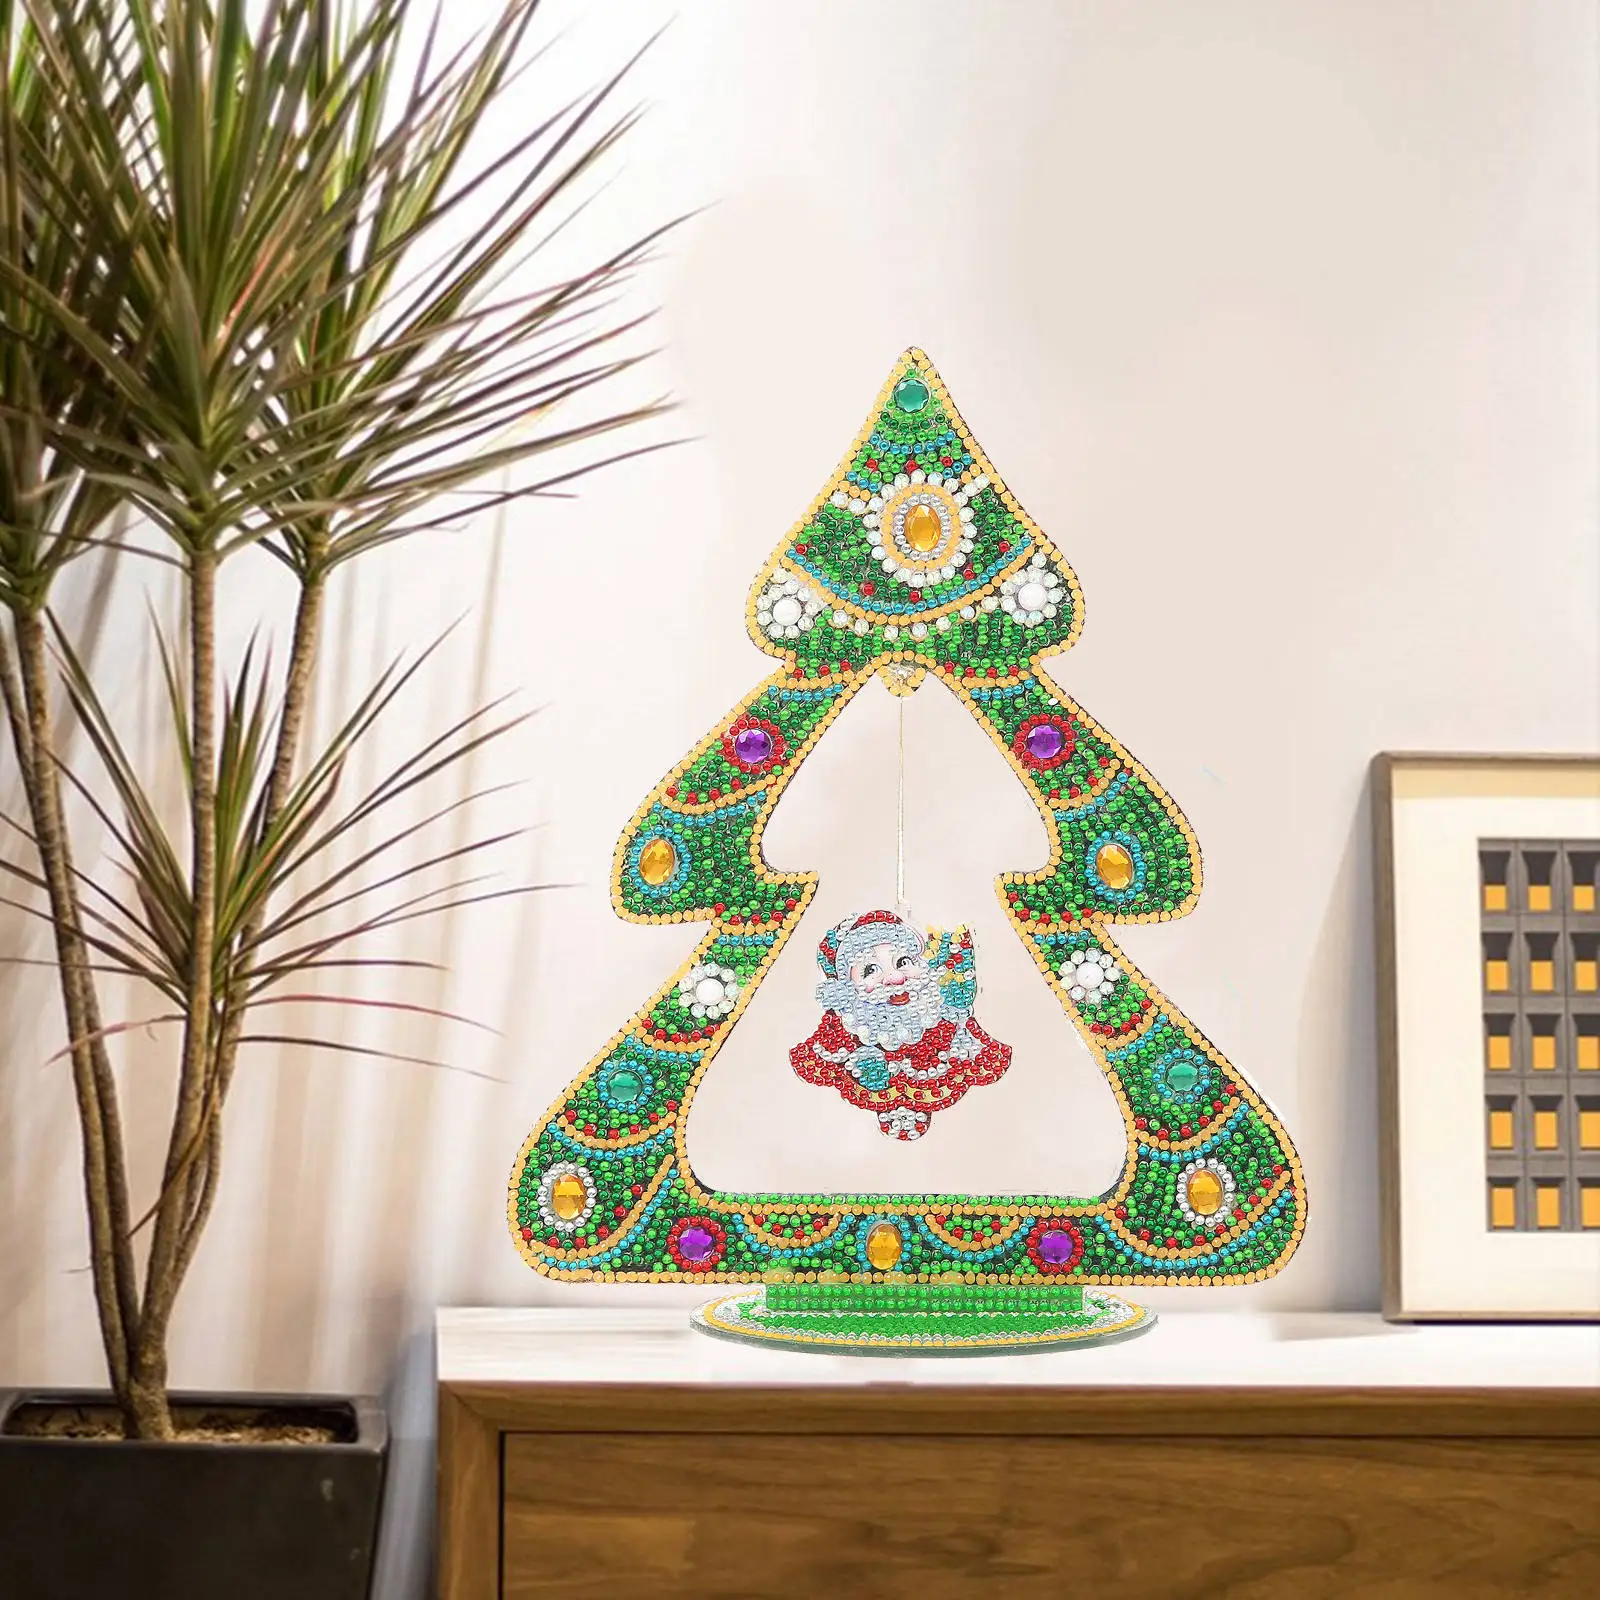 DIY Diamond Painting 5D Mosaic Crystal Christmas Tree Craft Diamond Painting Kit Home Ornaments Gifts New Year Home Decor